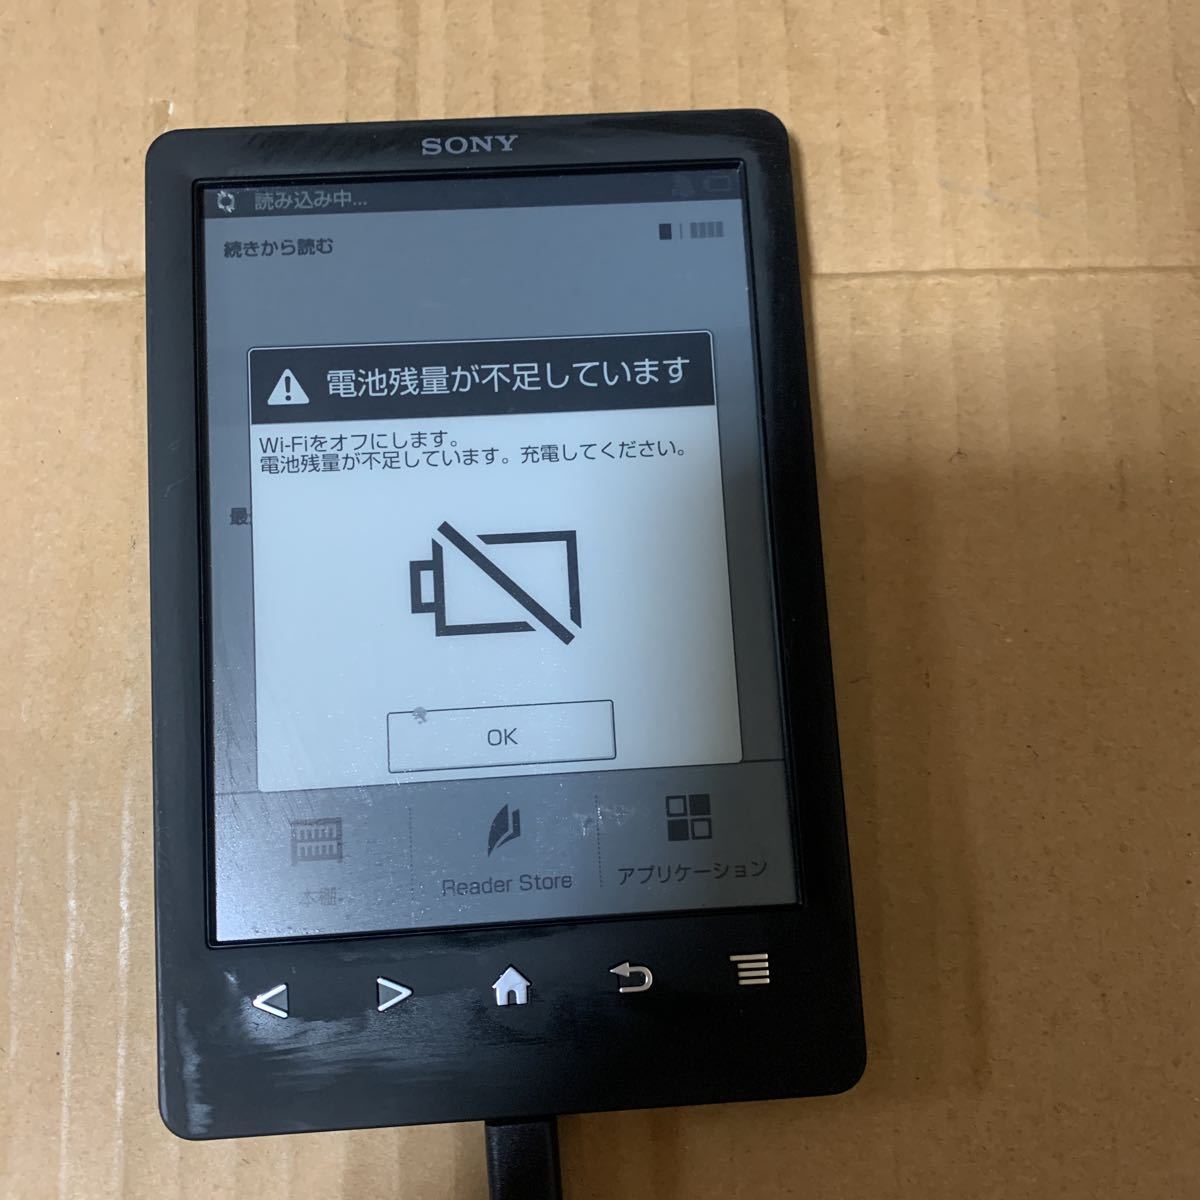 a-1748) SONY Sony PRS-T3S Reader электронная книга электризация только проверка Junk 